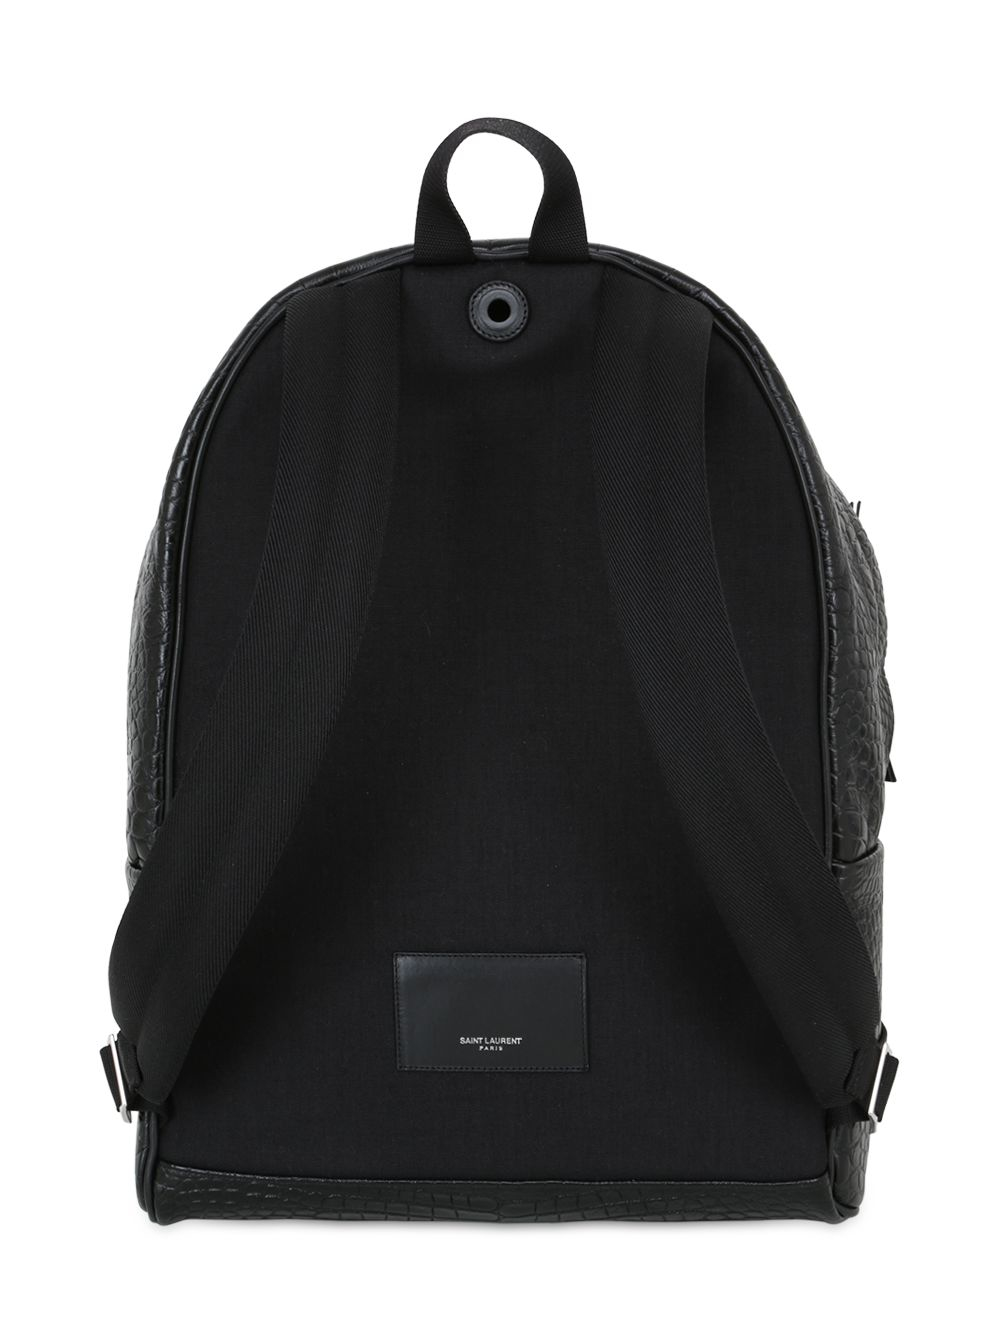 Lyst - Saint Laurent Croc Embossed Leather Backpack in Black for Men